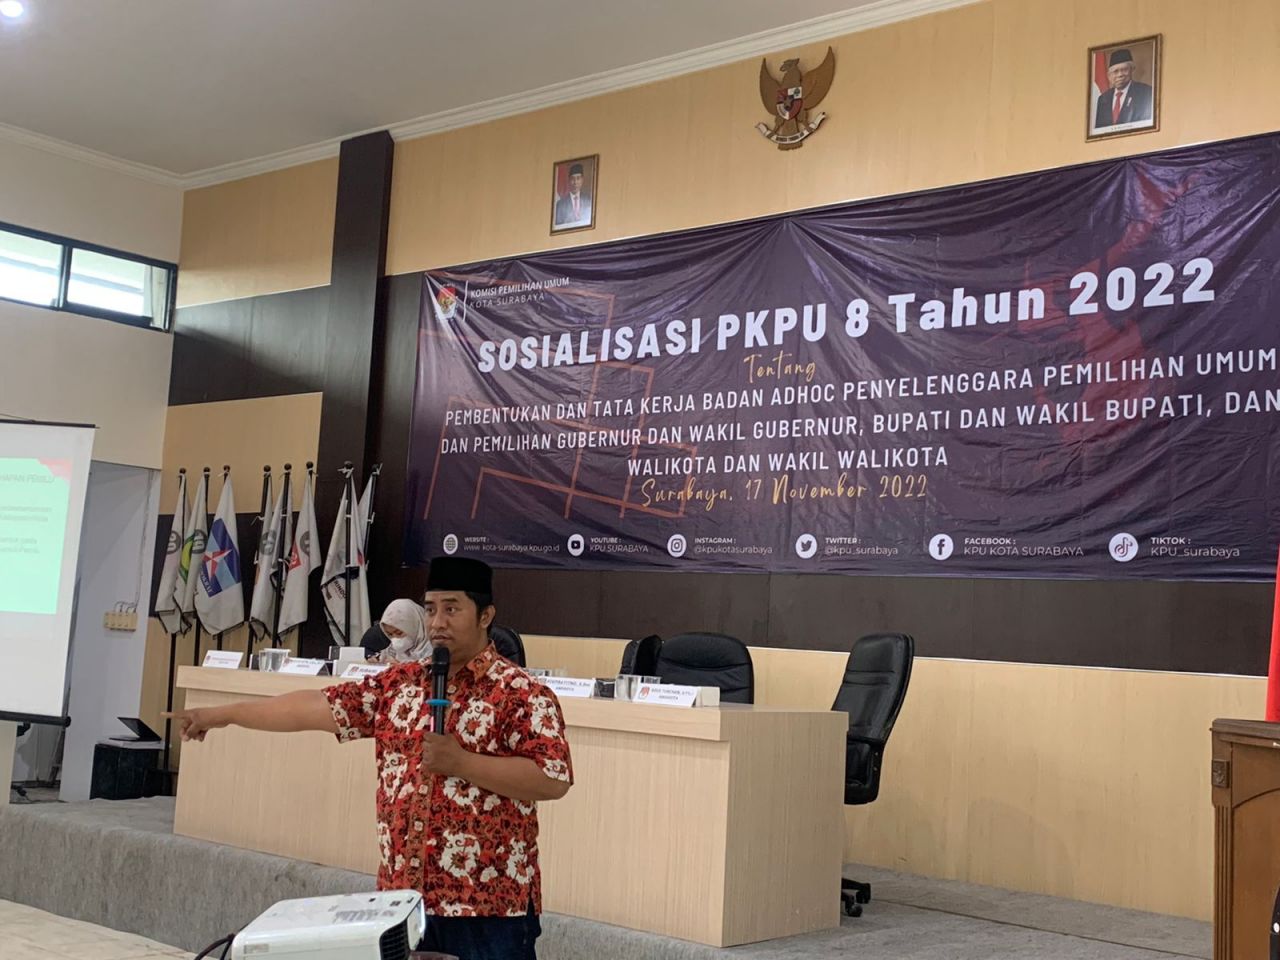 KPU Surabaya Sosialisasi PKPU 8 Tahun 2022